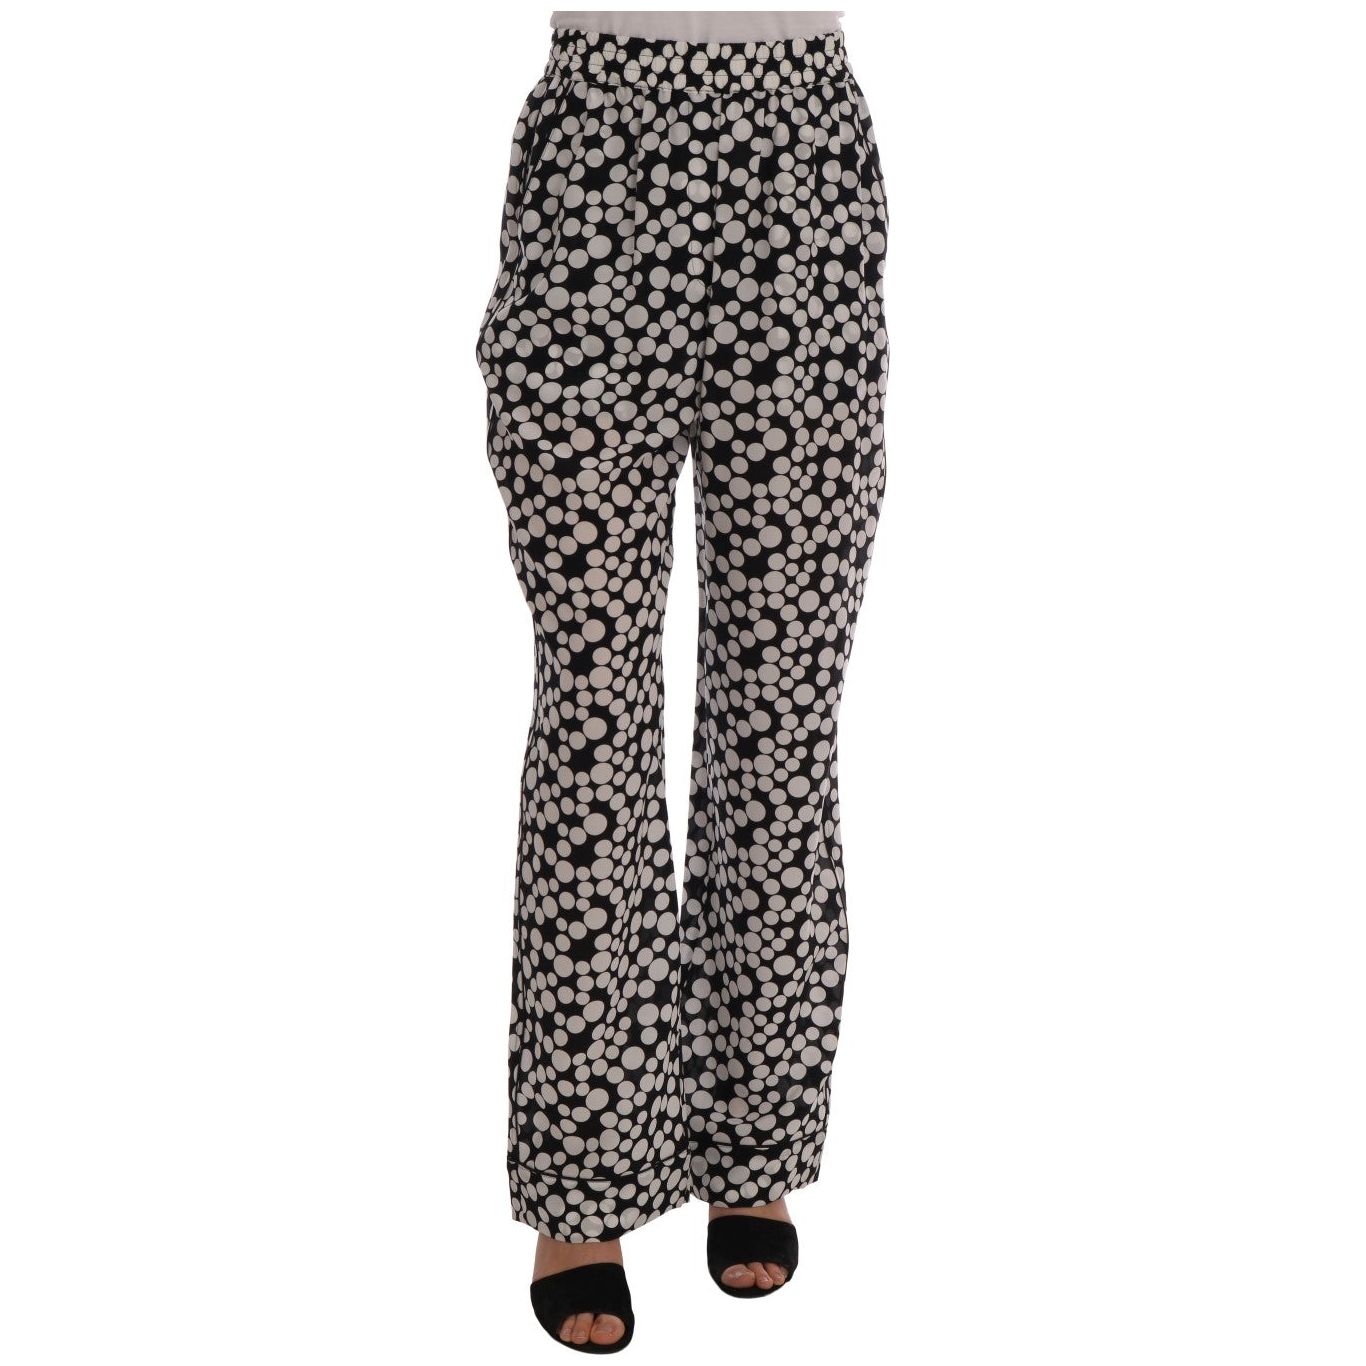 Dolce & Gabbana Elegant Polka Dot Silk High-Waist Pants Jeans & Pants black-white-polka-dottes-silk-pants 508363-black-white-polka-dottes-silk-pants.jpg